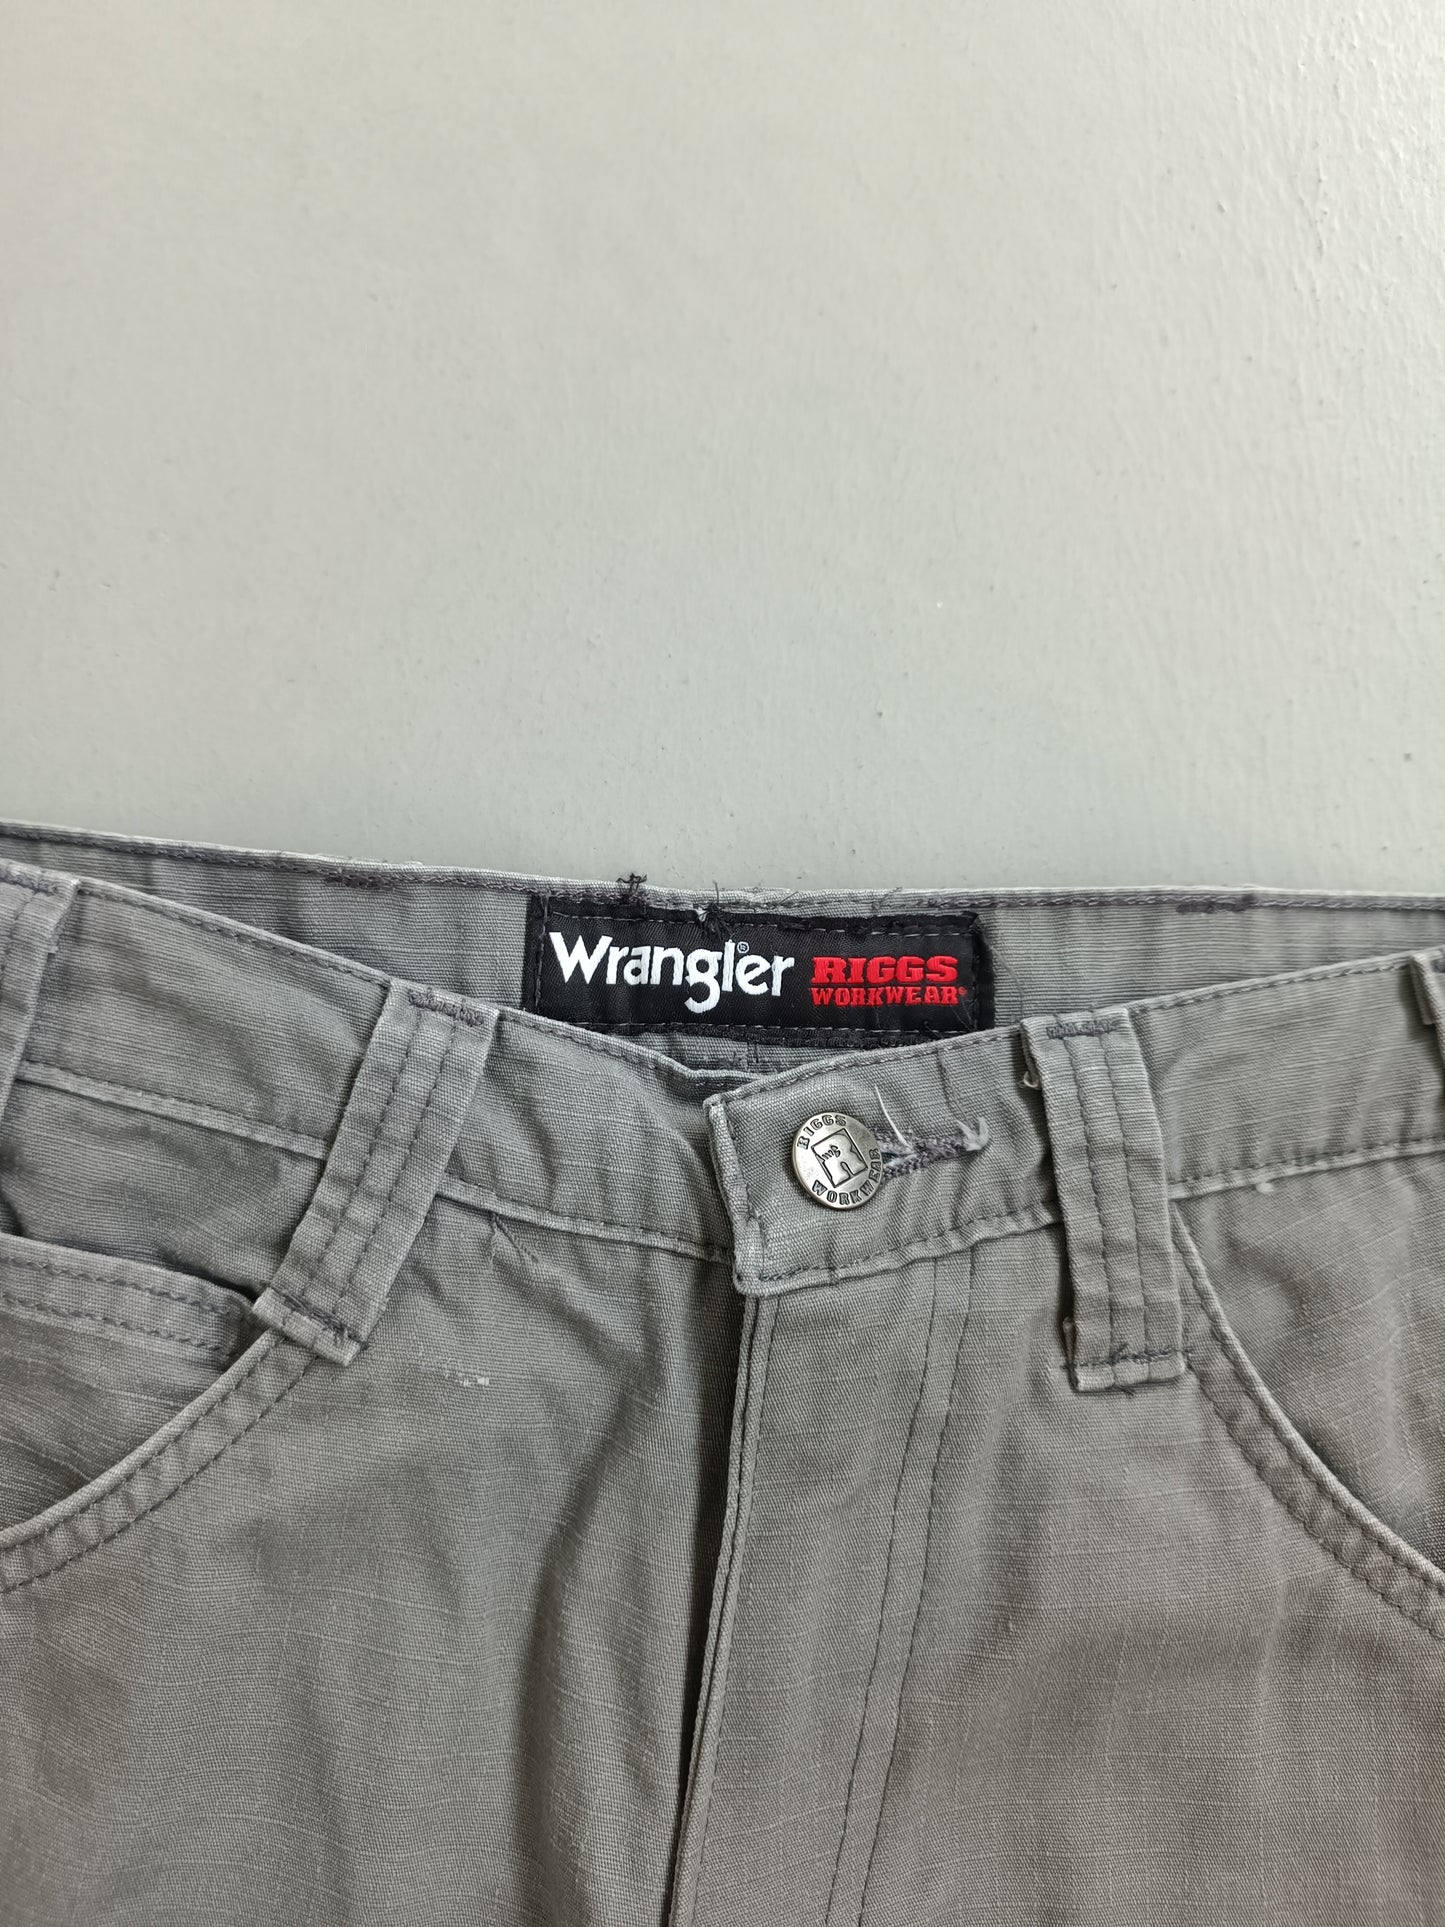 Wrangler Ripstop Cargo Pants - W30